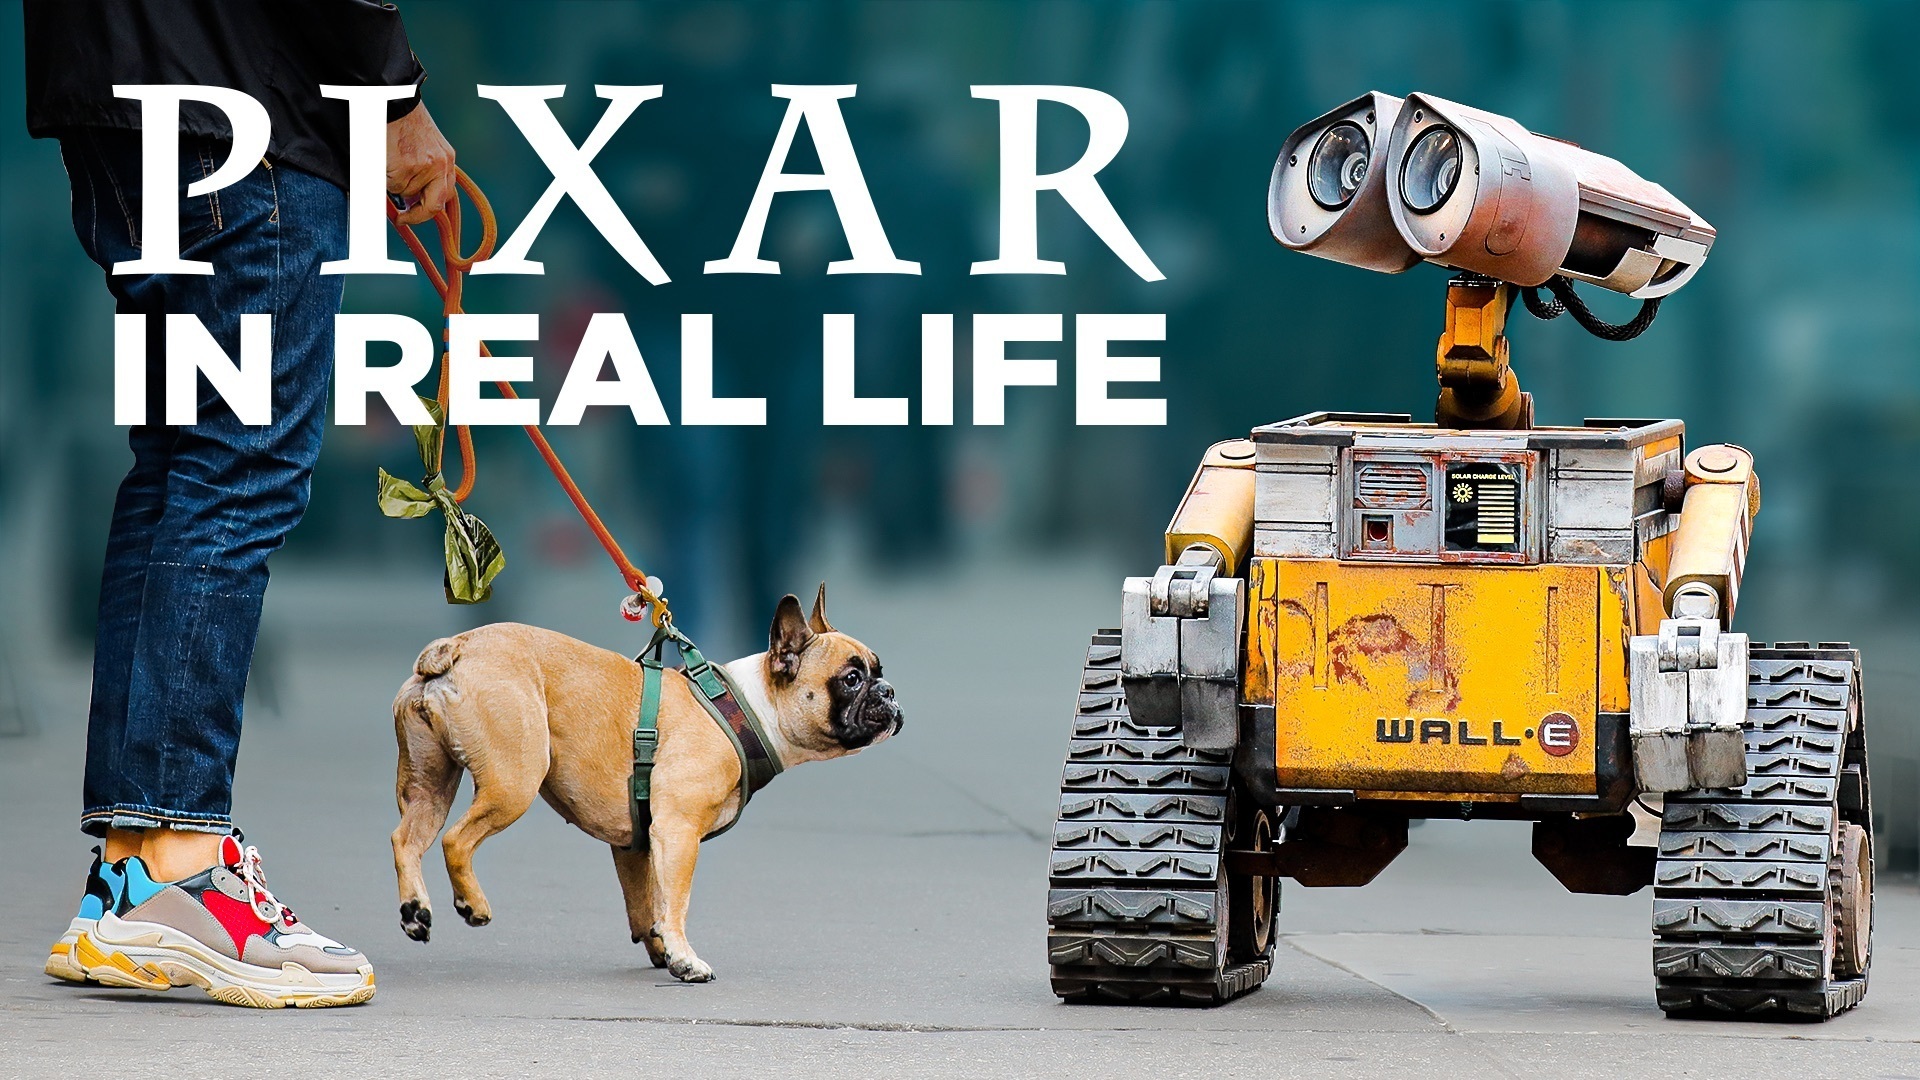 Pixar In Real Life on Disney+